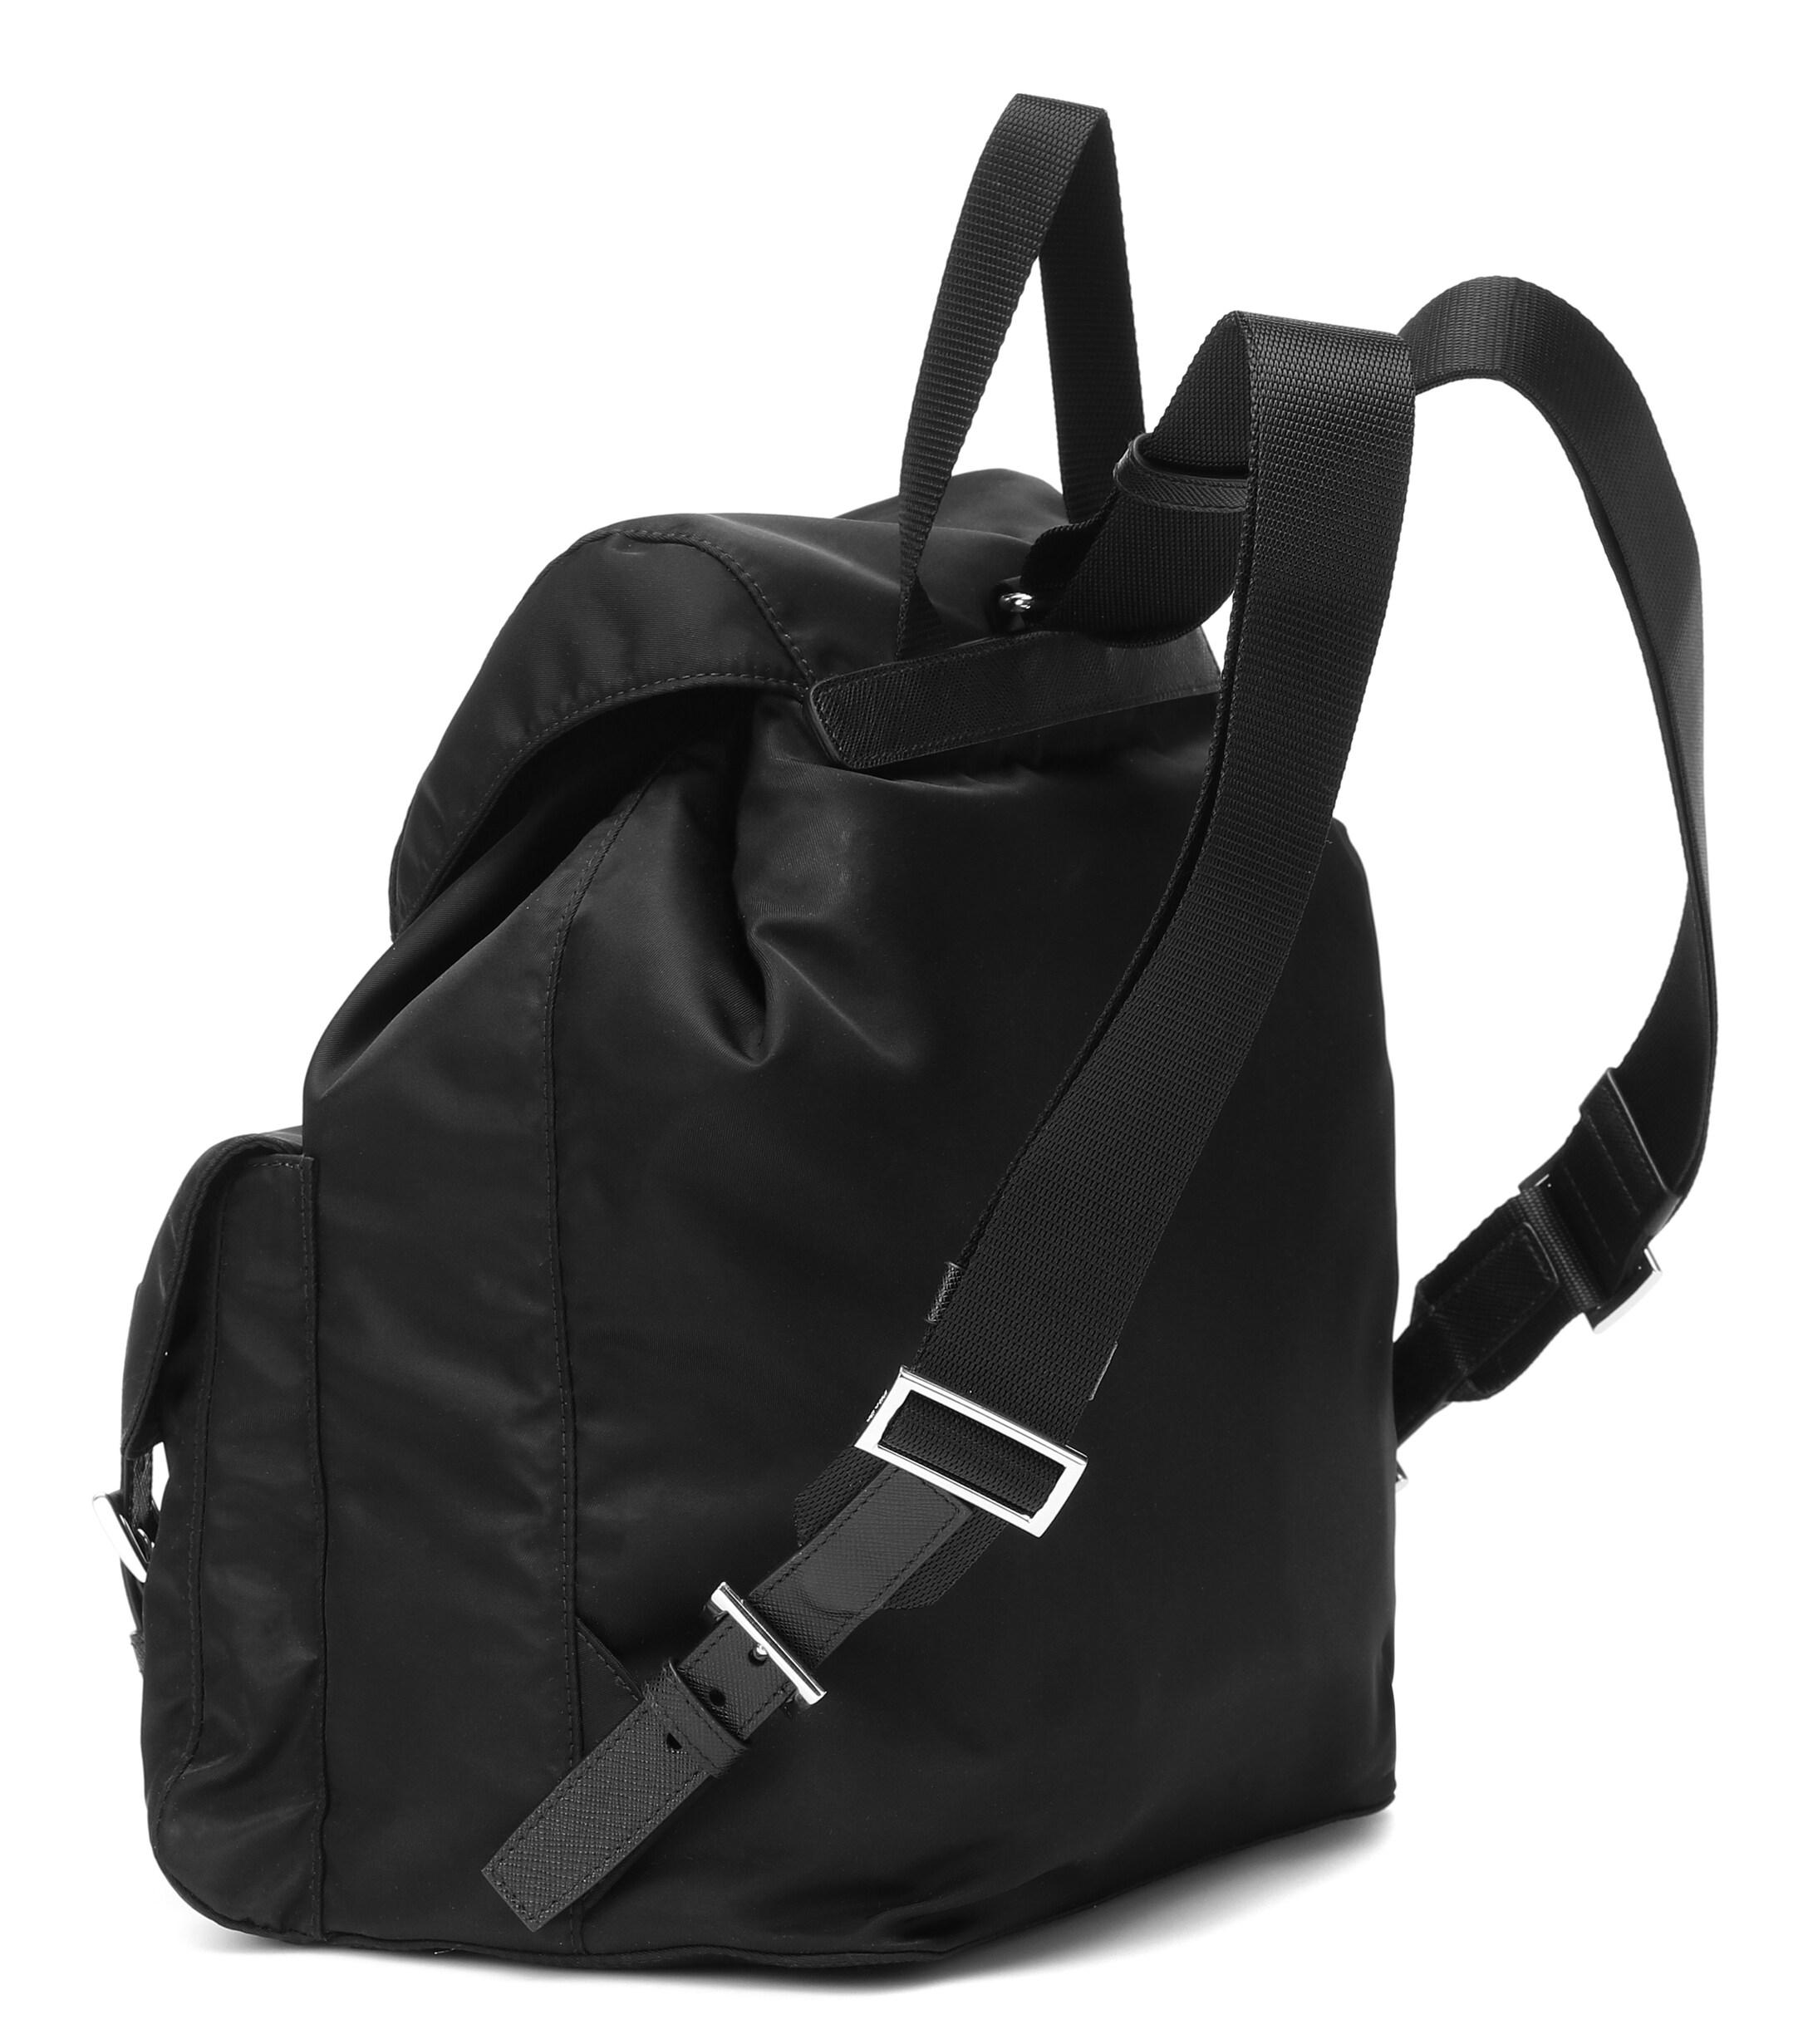 Prada Synthetic Nylon Backpack in Black - Lyst